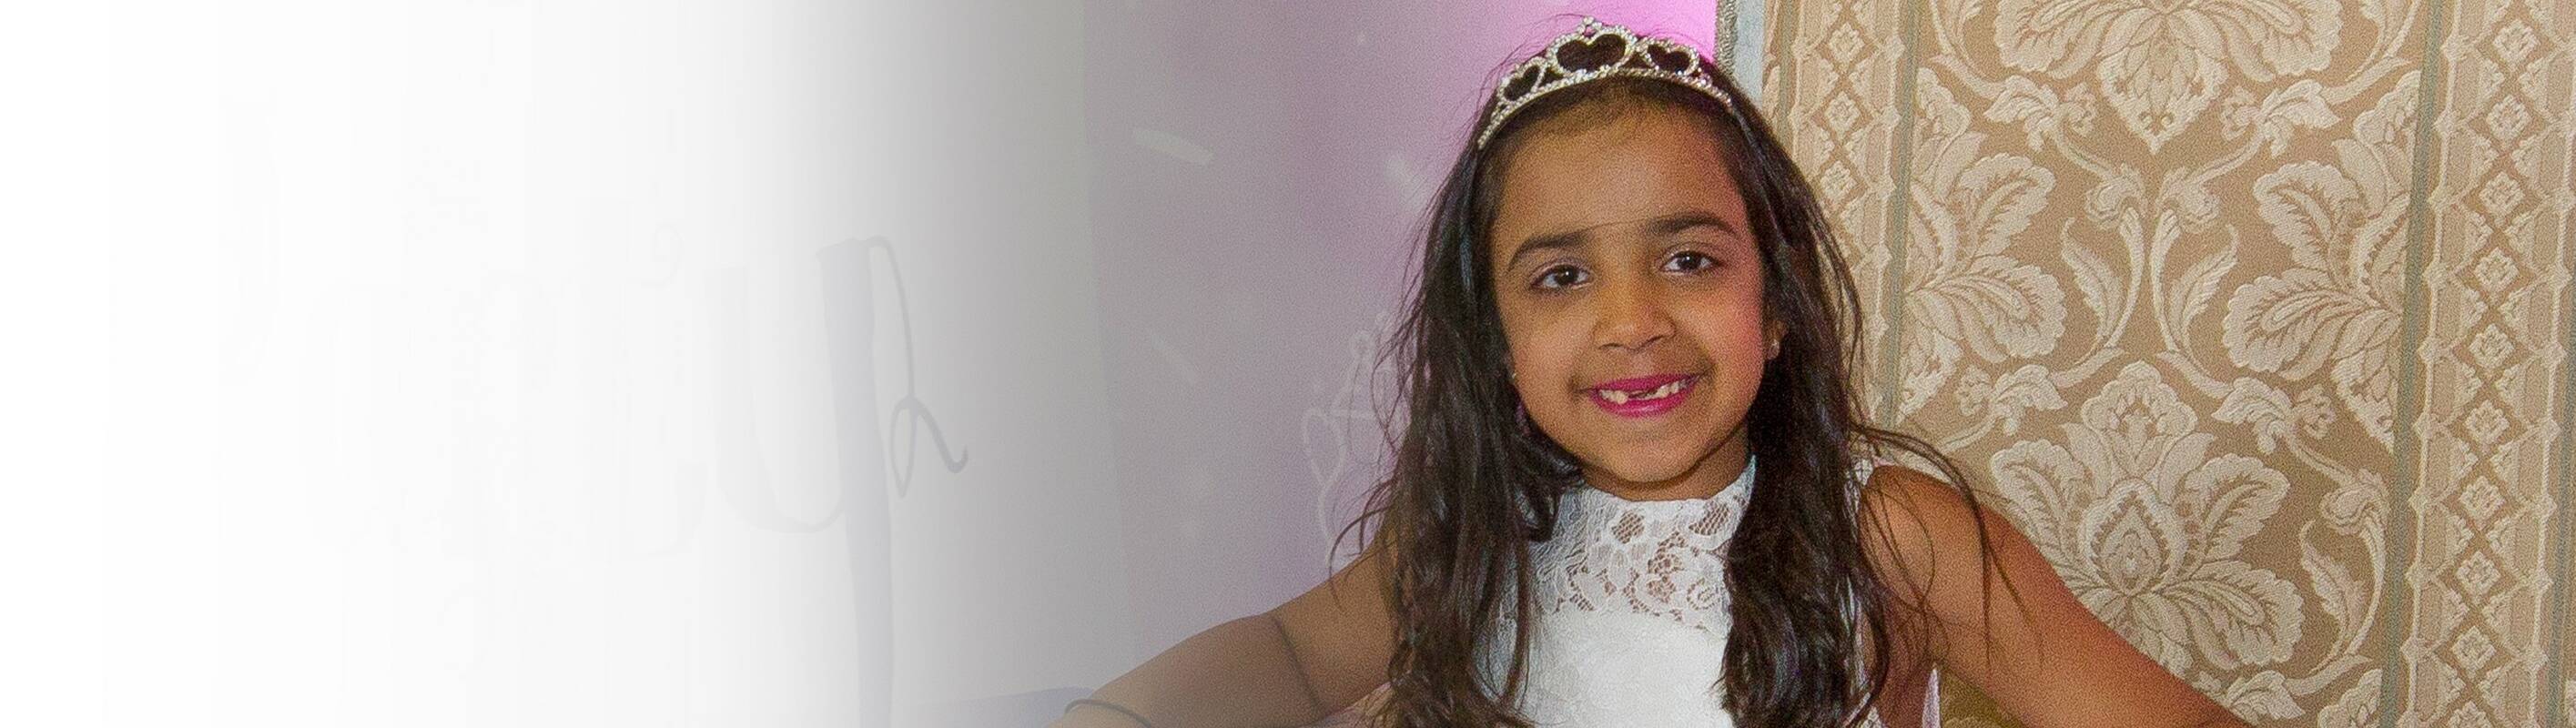 Make-A-Wish Australia wish kid Priya dressed as a princess